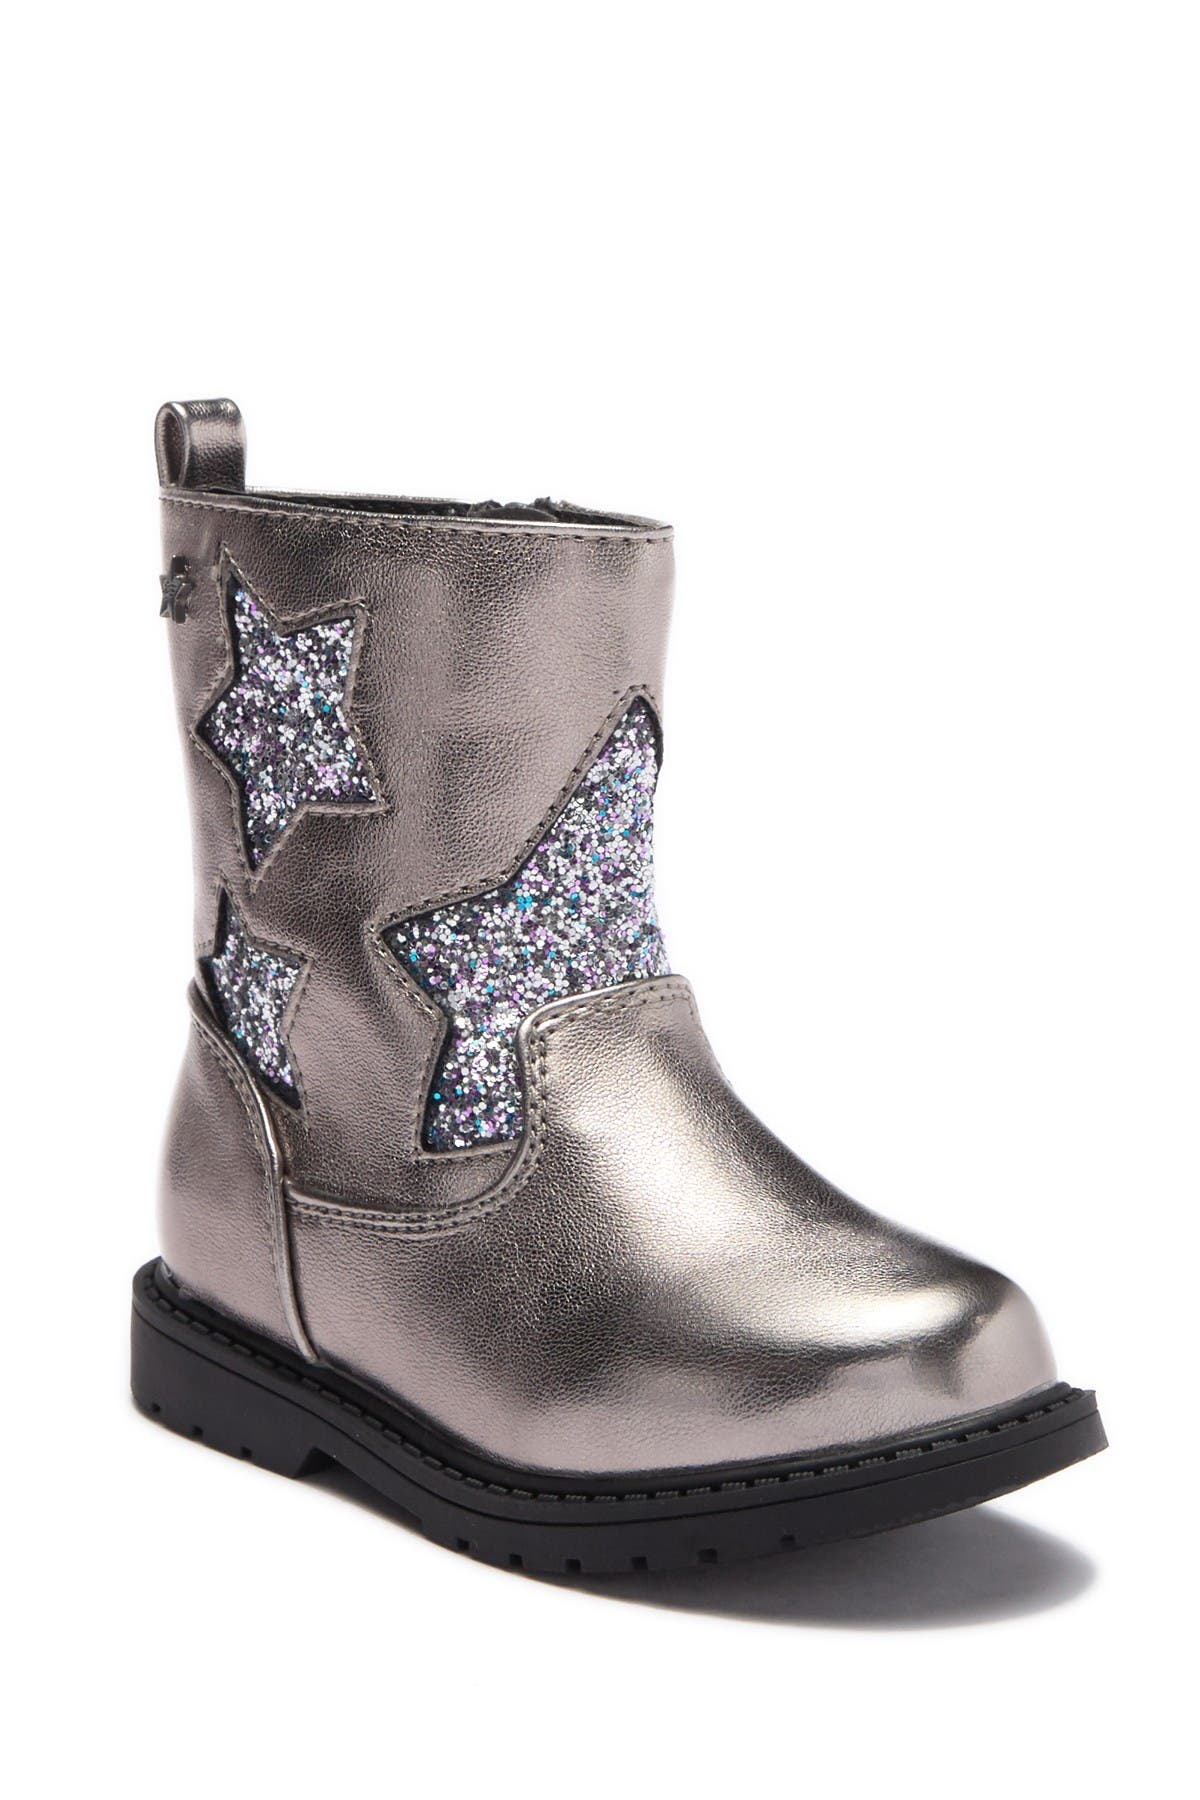 nordstrom glitter boots